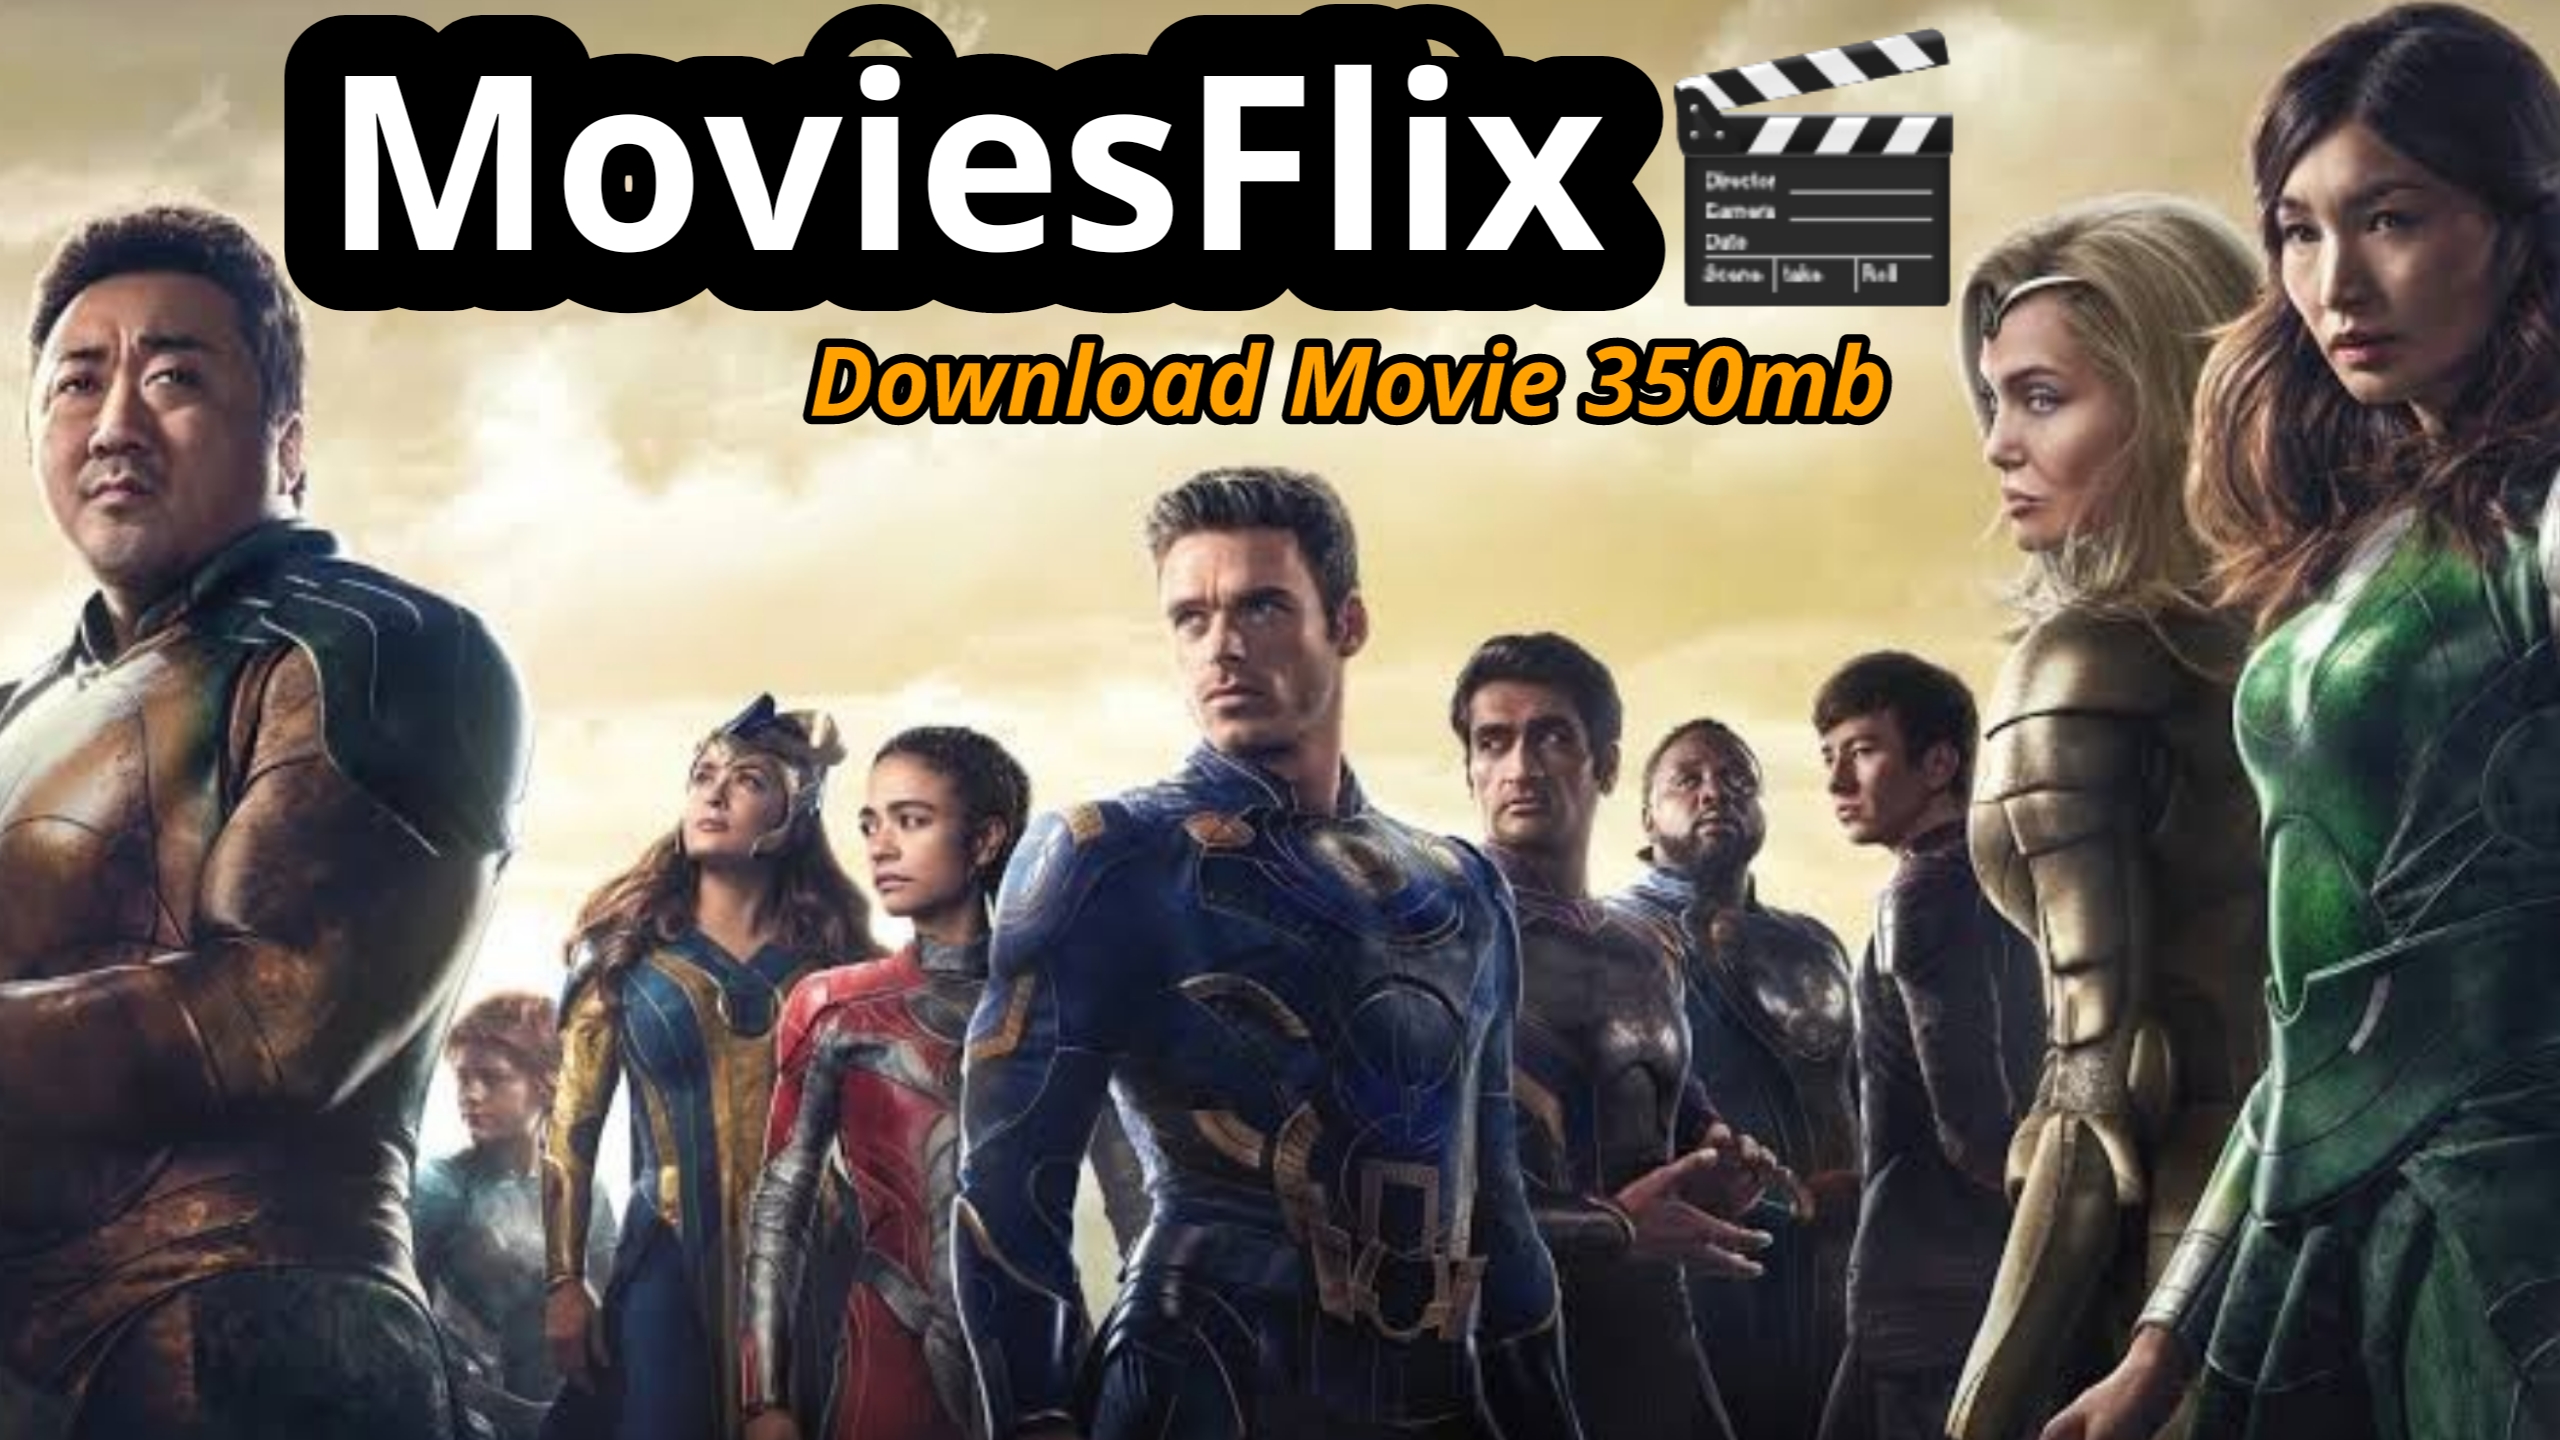 TheMoviesFlix.com |Moviesflix | Movies flix | moviesflix-350mb